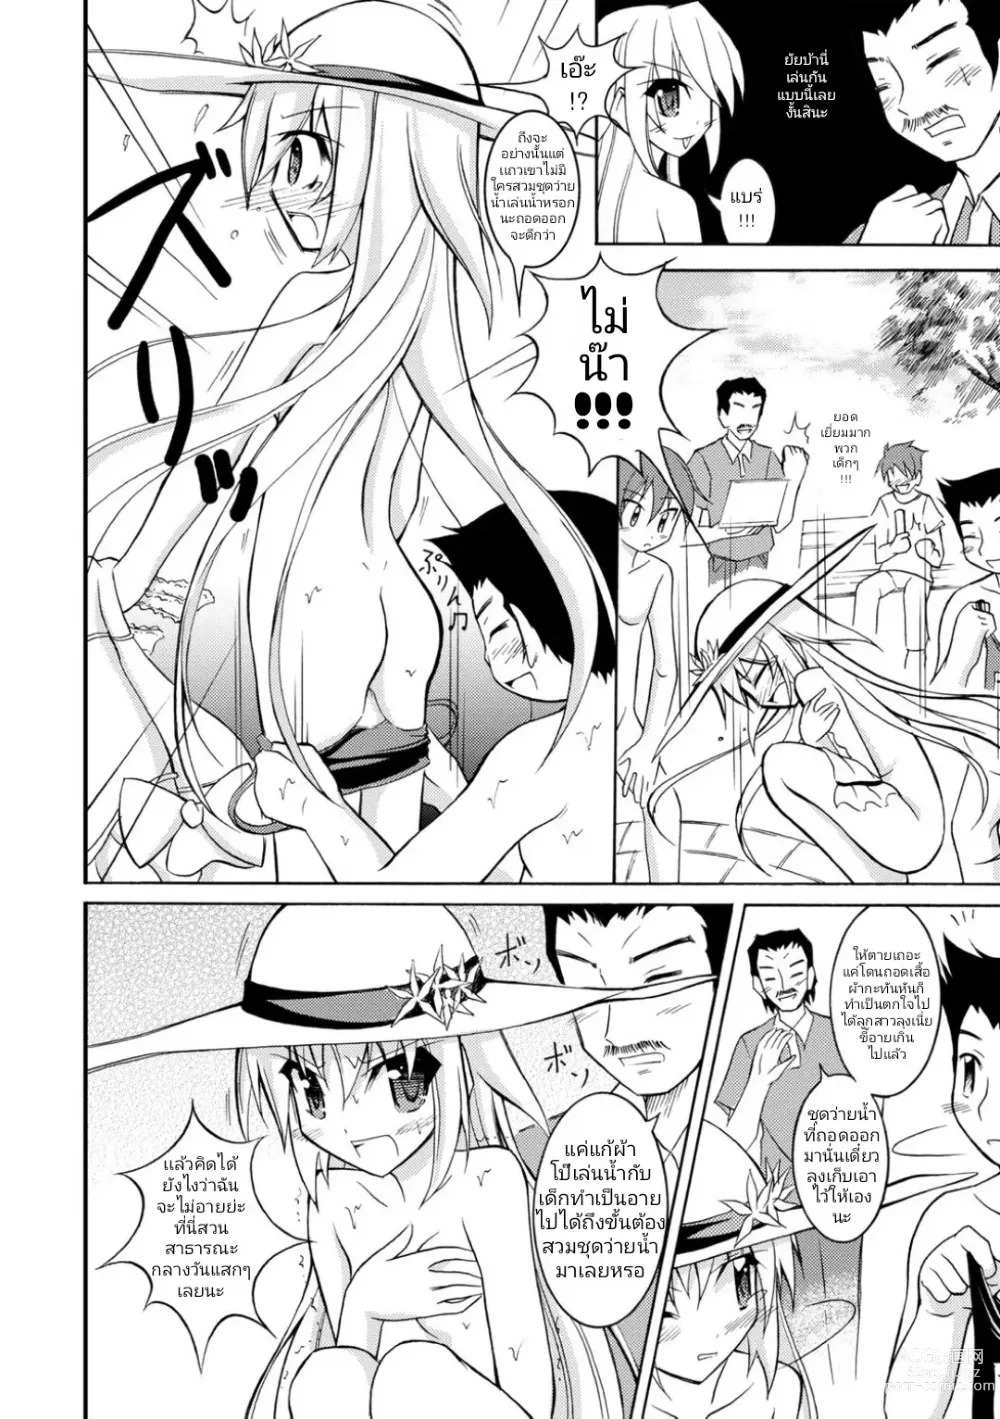 Page 6 of manga การละเล่นเปิดตัวที่สวนสาธารณะ